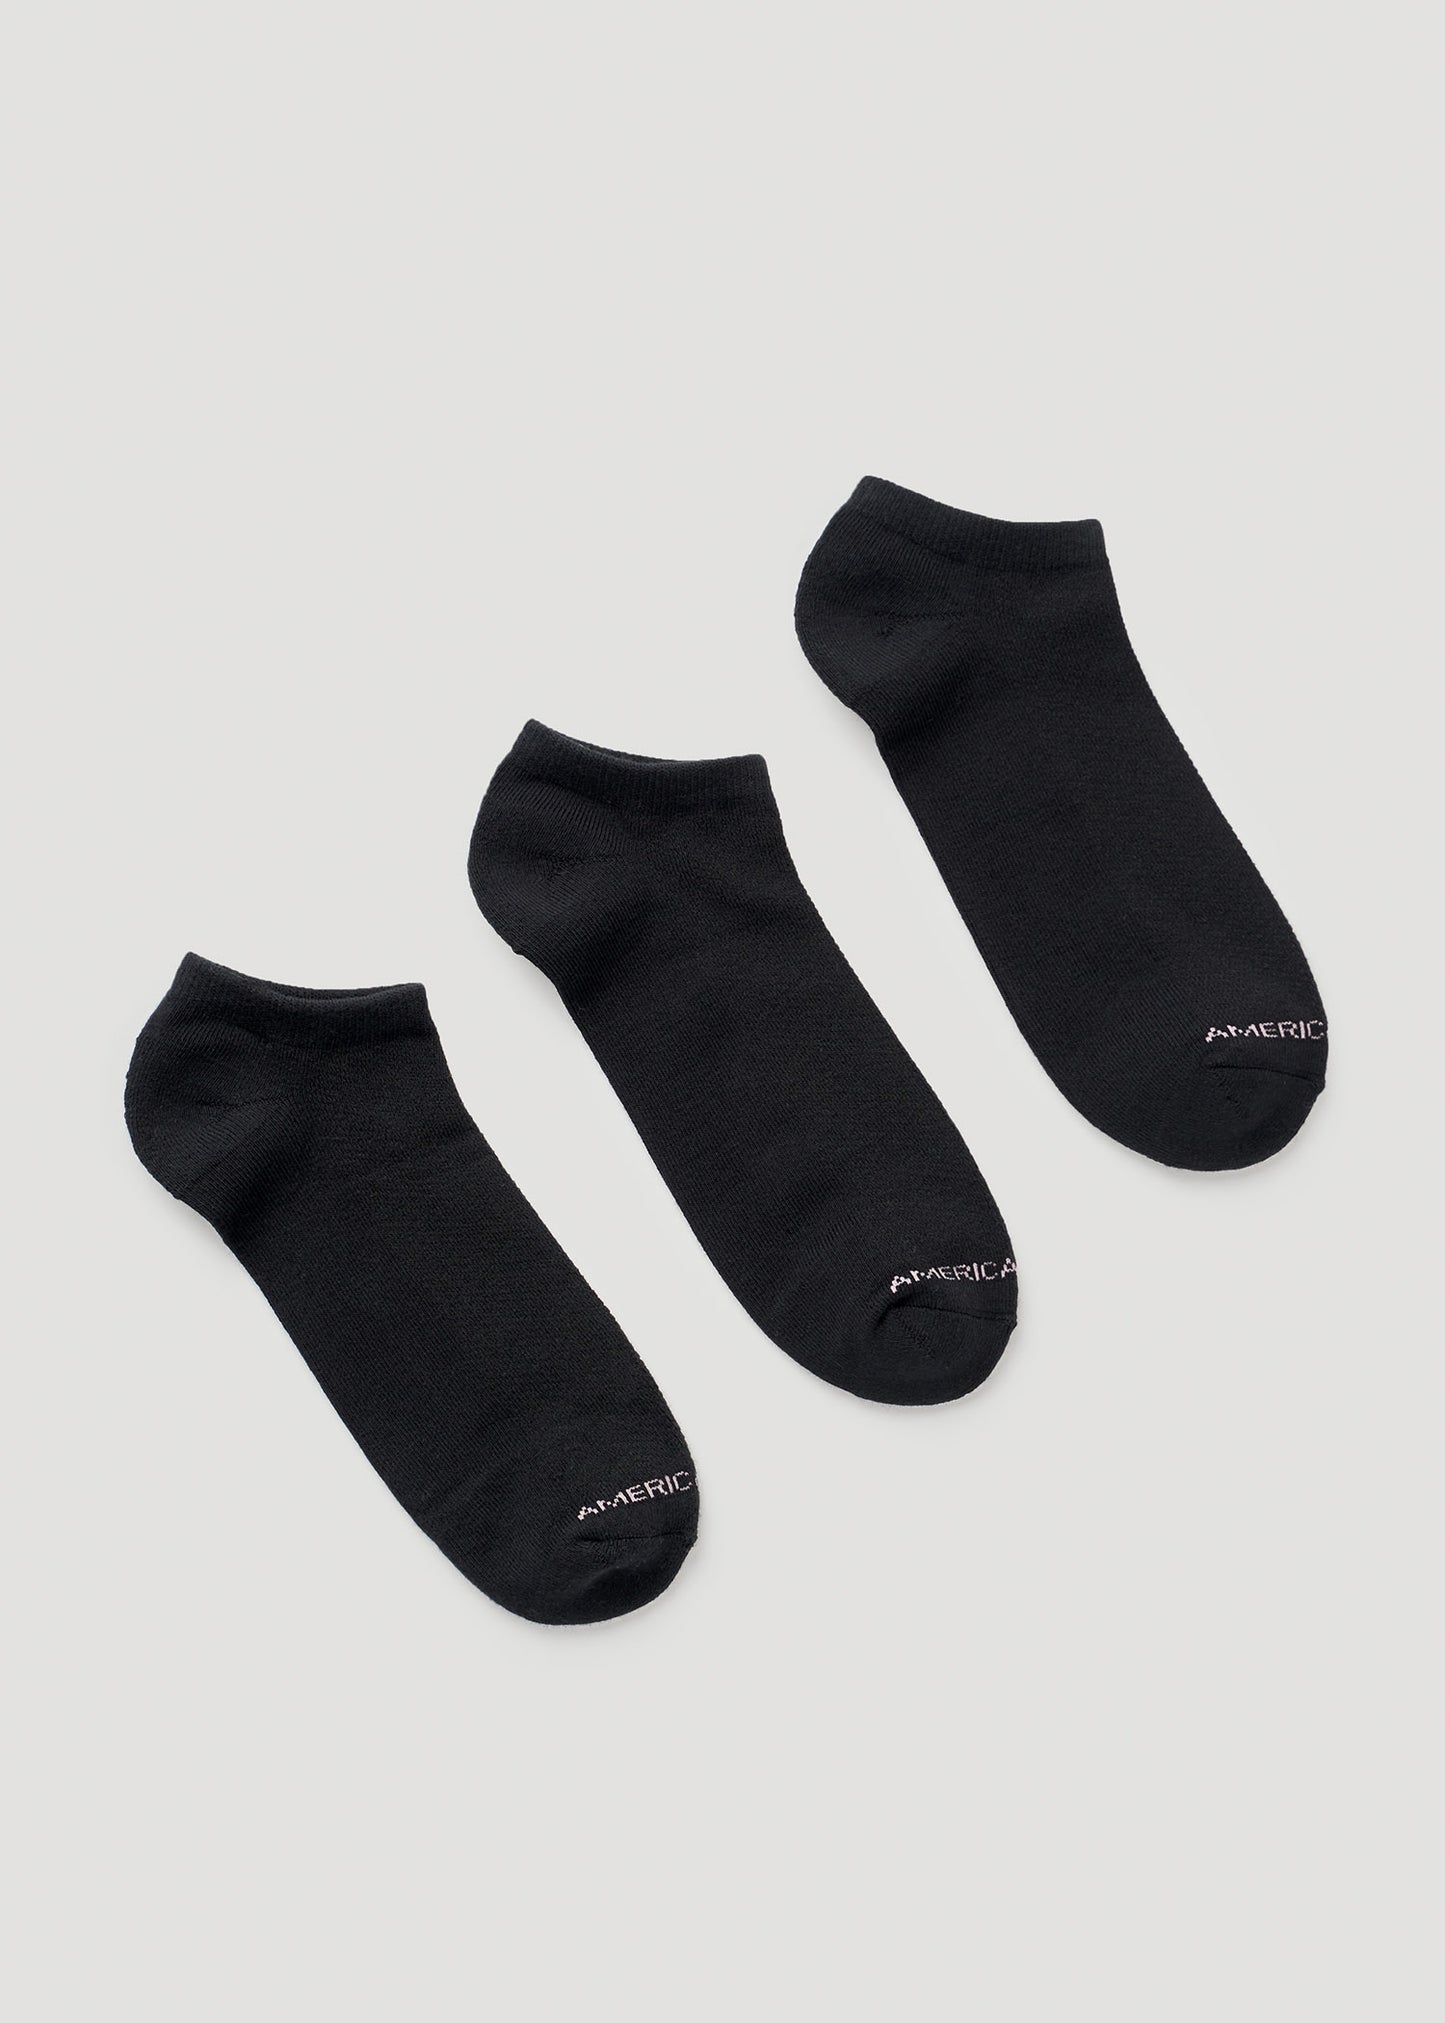 Women's Ankle Socks (X-Large Size: 10-13)